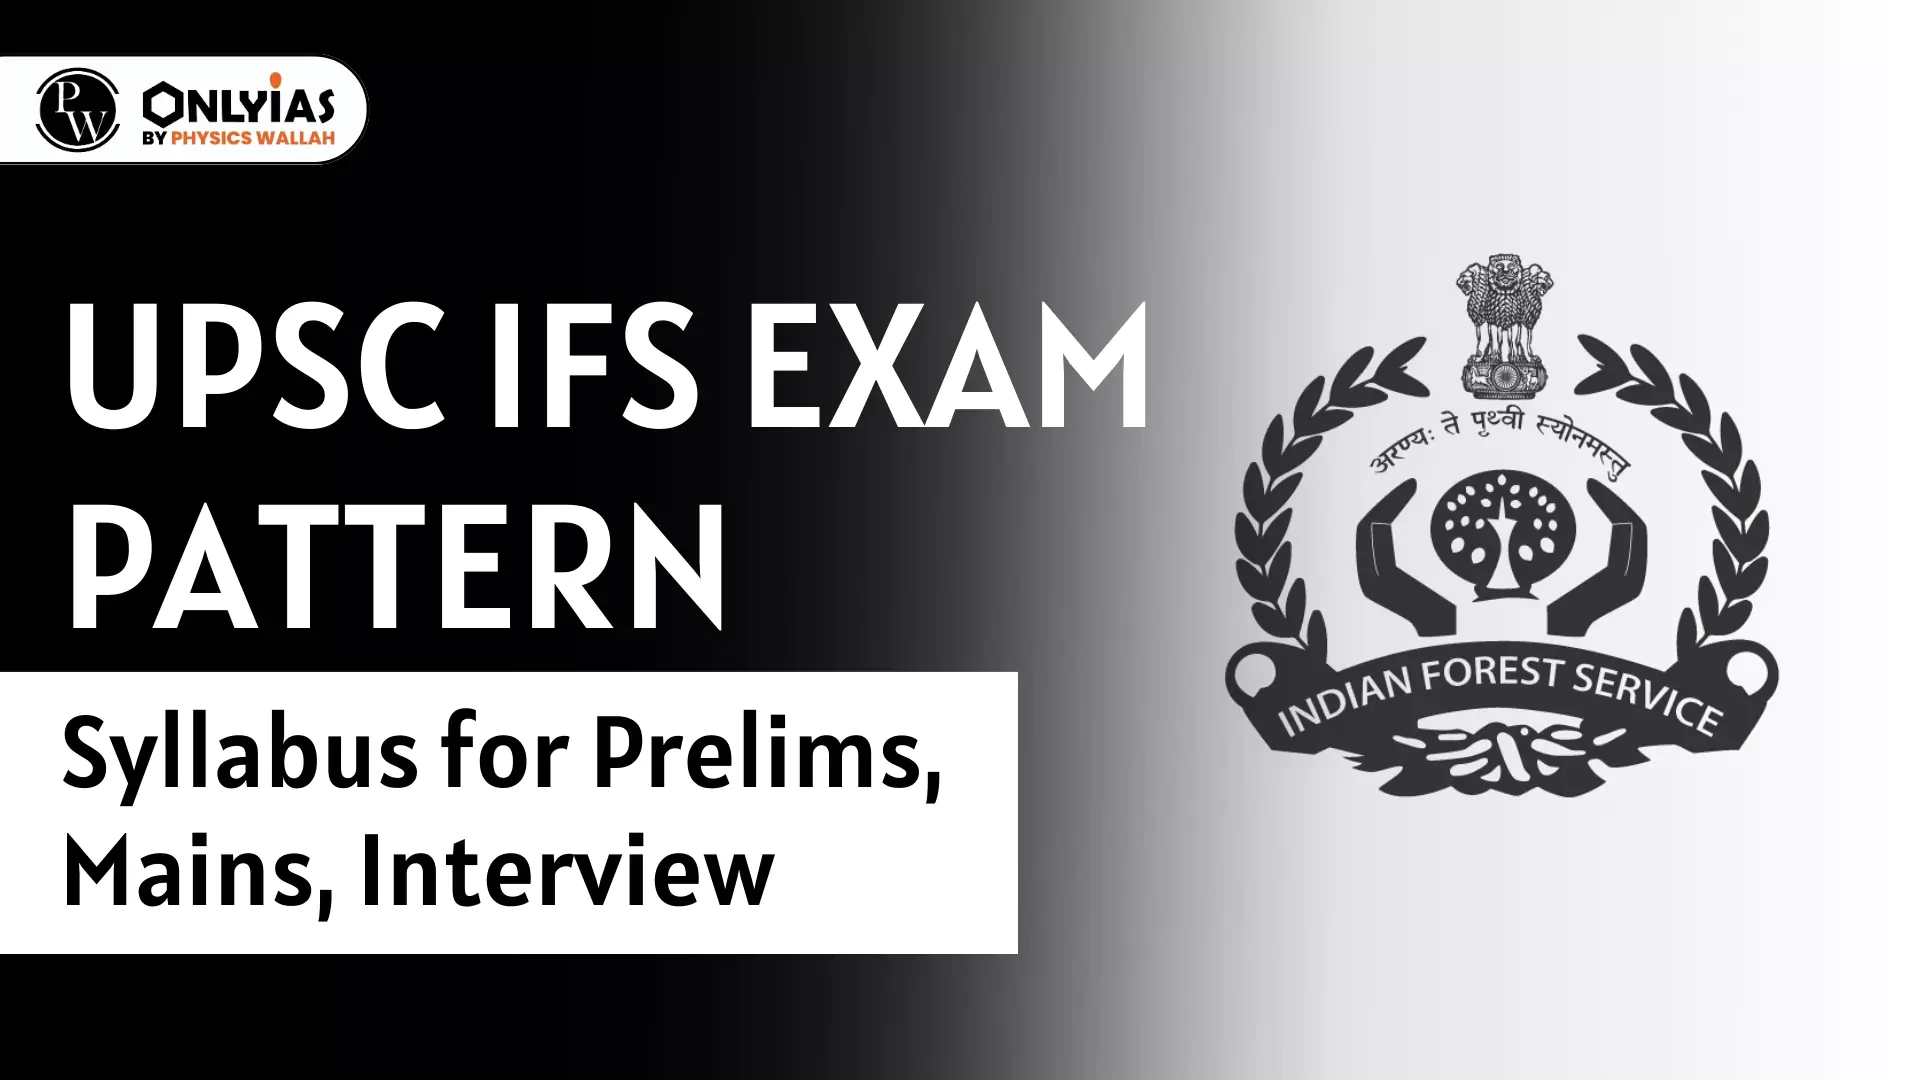 UPSC IFS Exam Pattern: Syllabus For Prelims, Mains, Interview - PWOnlyIAS